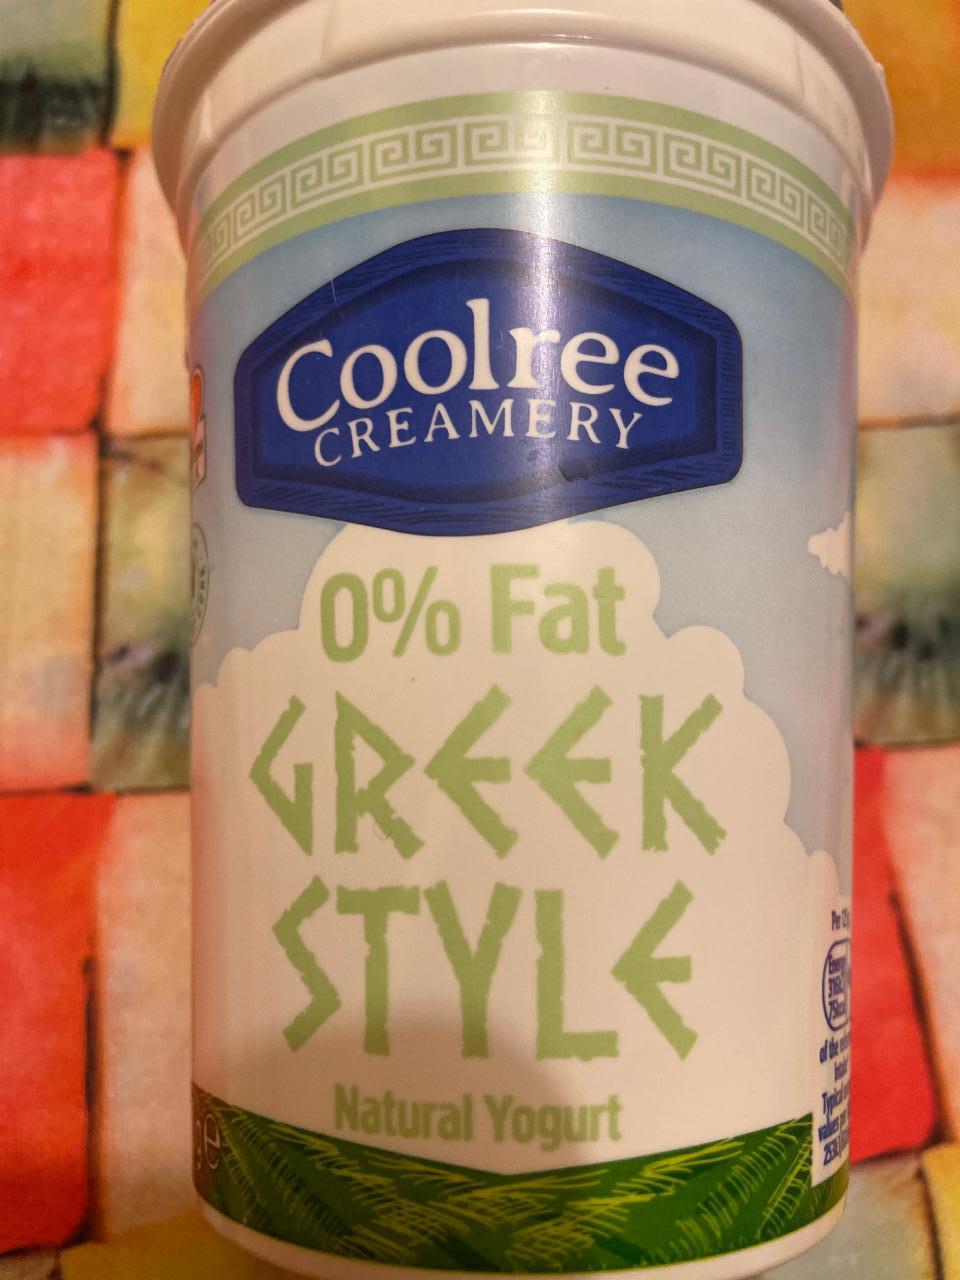 Fotografie - Greek Style Natural Yogurt 0% Fat Coolree Creamery